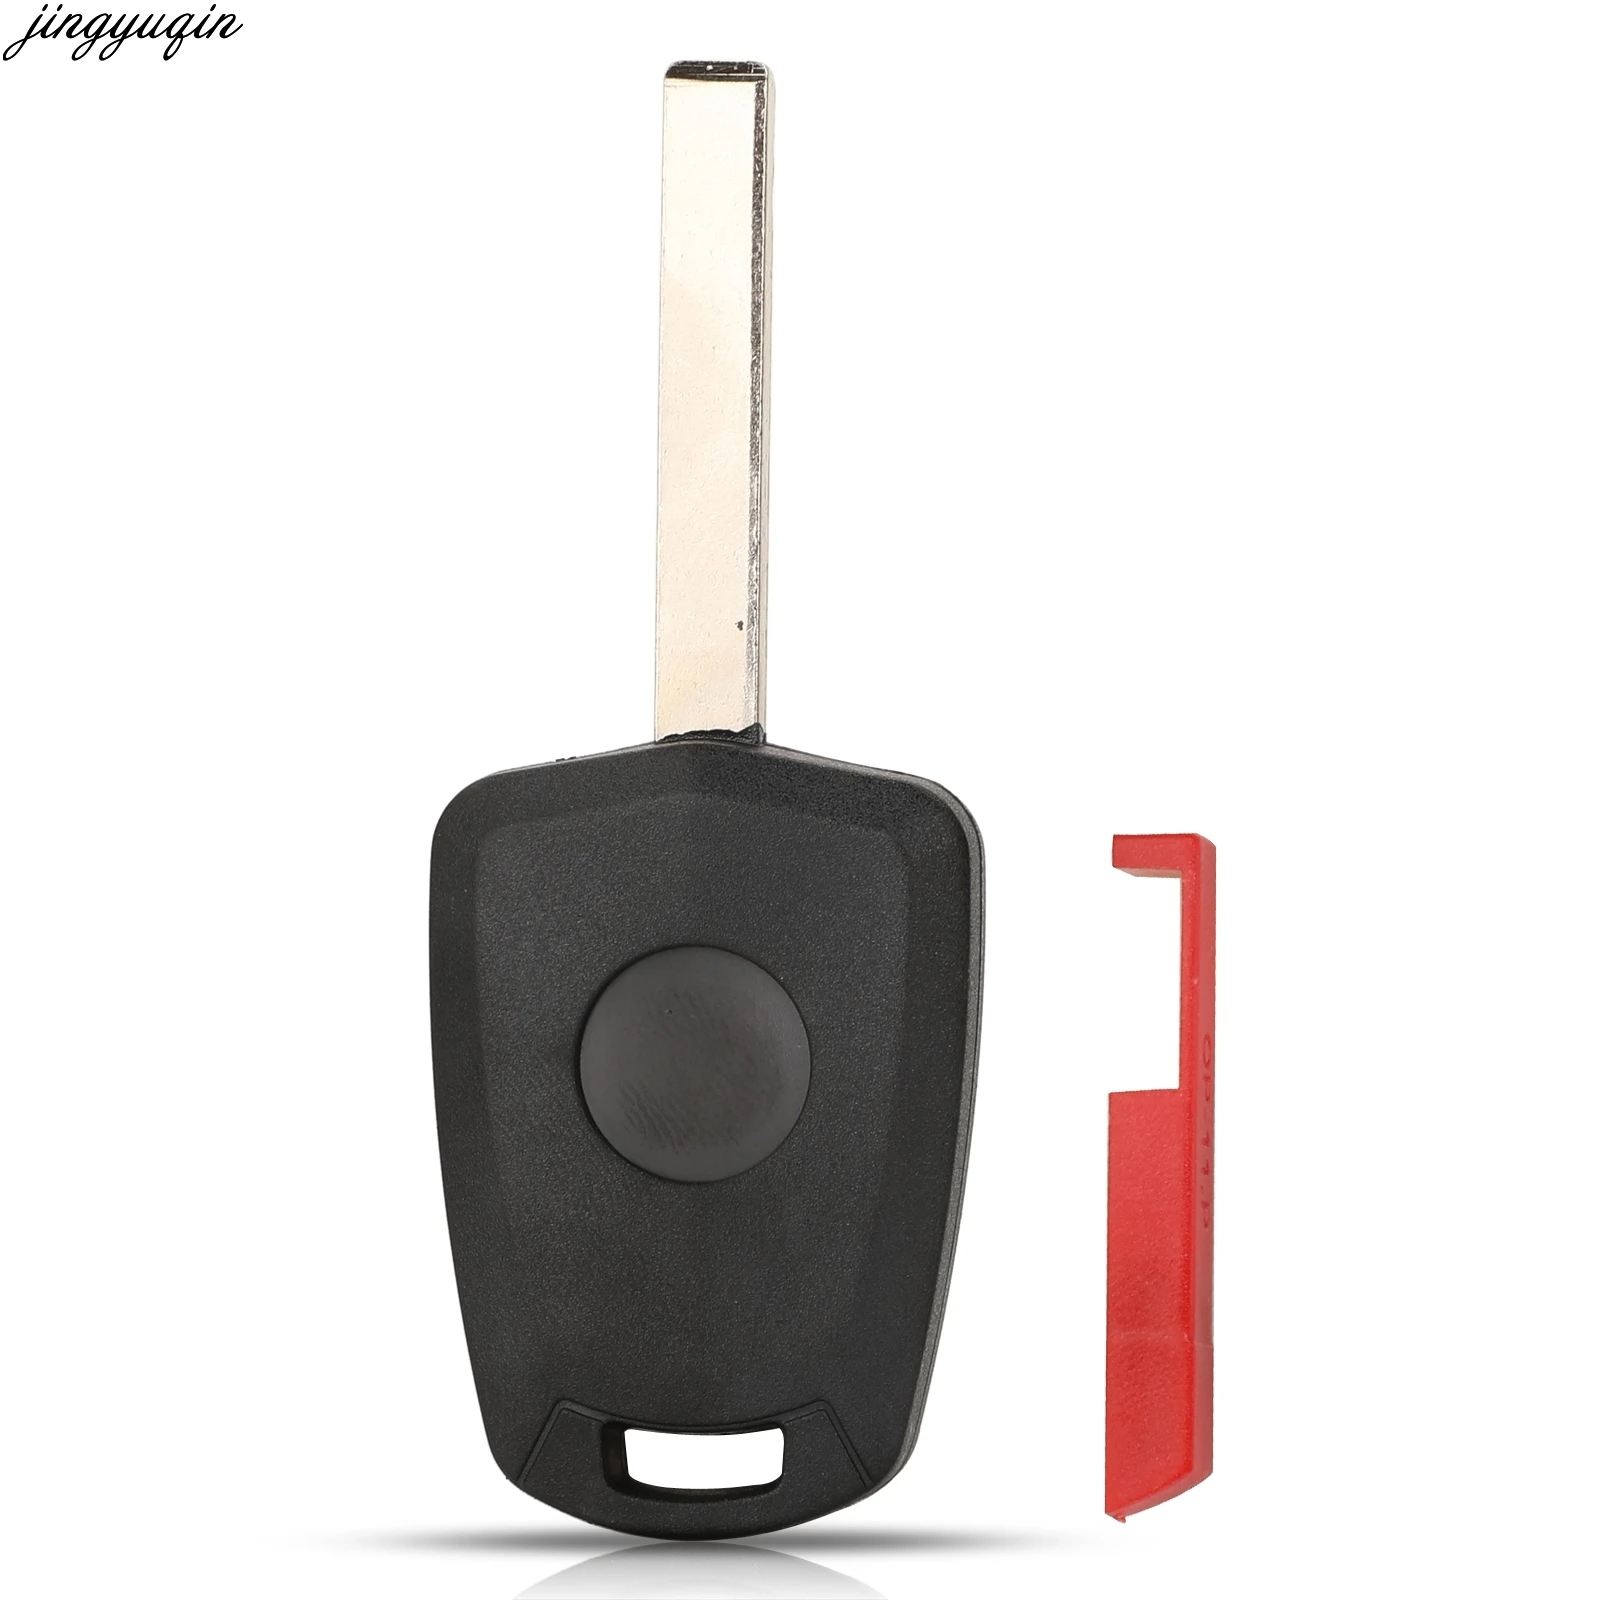 

Jingyuqin 30pcs Remote Car Key Case Shell For Vauxhall Opel Corsa Astra Vectra Transponder Chip Fob Uncut Blank